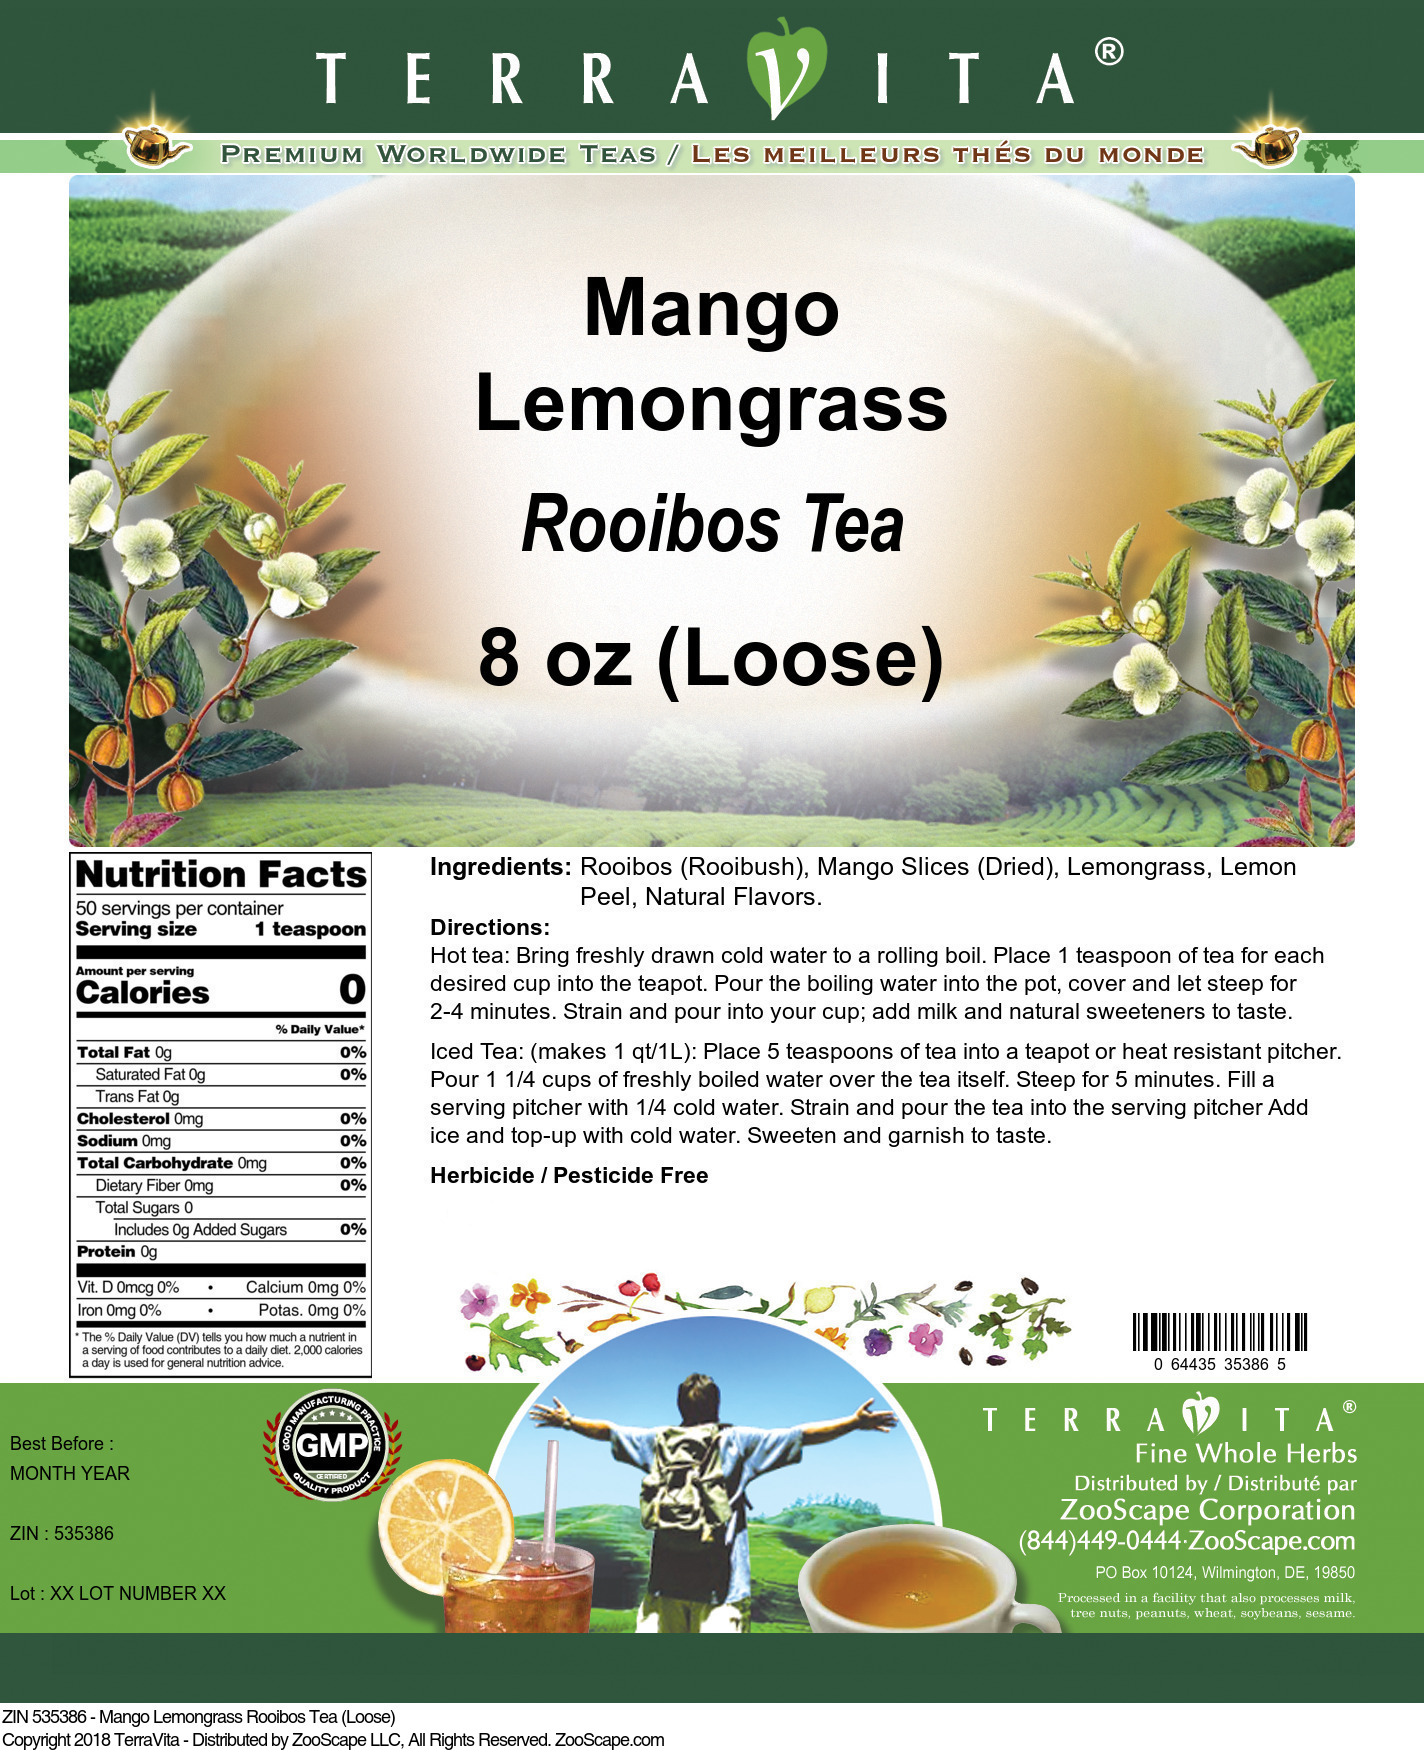 Mango Lemongrass Rooibos Tea (Loose) - Label